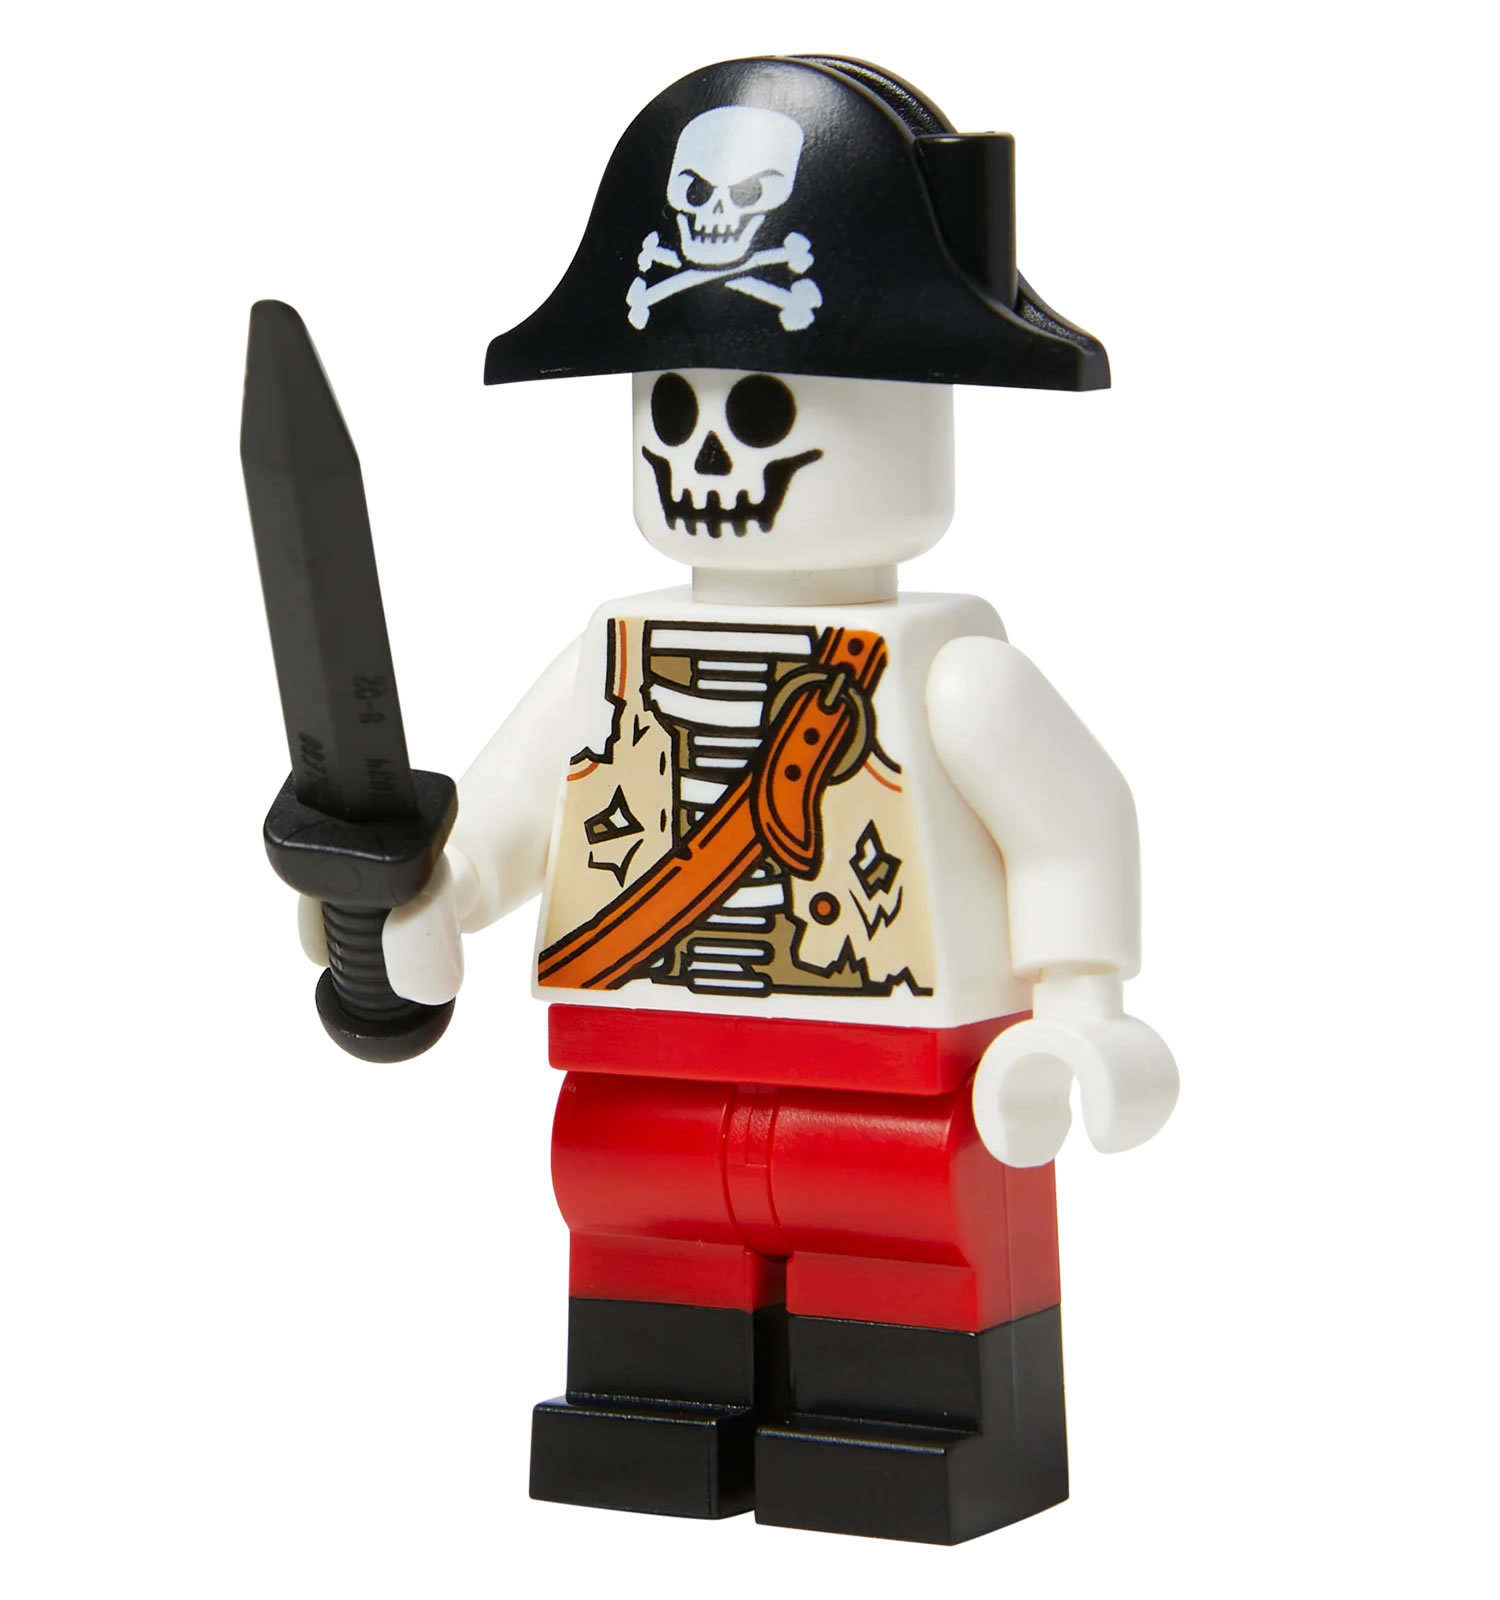 https://www.eurobricks.com/forum/uploads/monthly_2023_04/lego-skeleton-pirate-build-a-minifigure.jpg.2c581f909a13510c1f11eaa63c155354.jpg